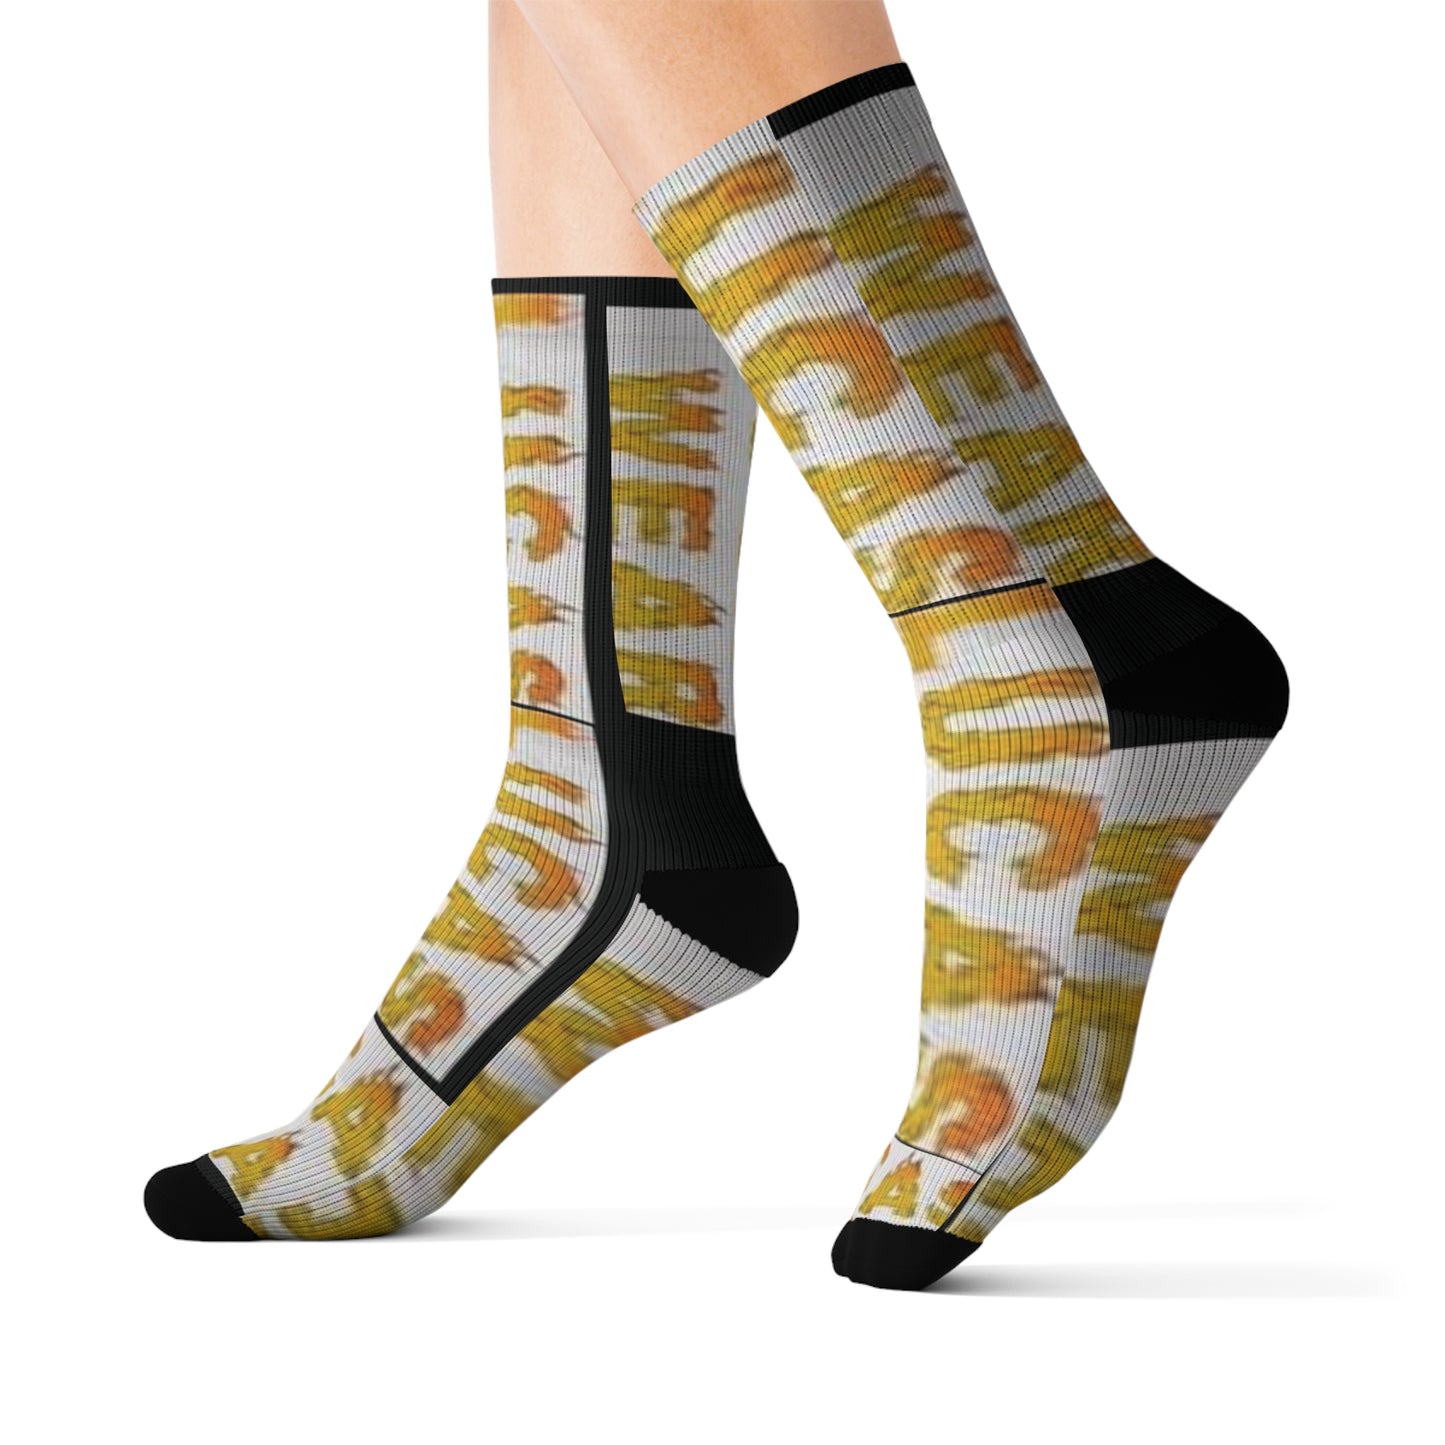 Designed By: Lucas Wear Flame Sublimation Socks